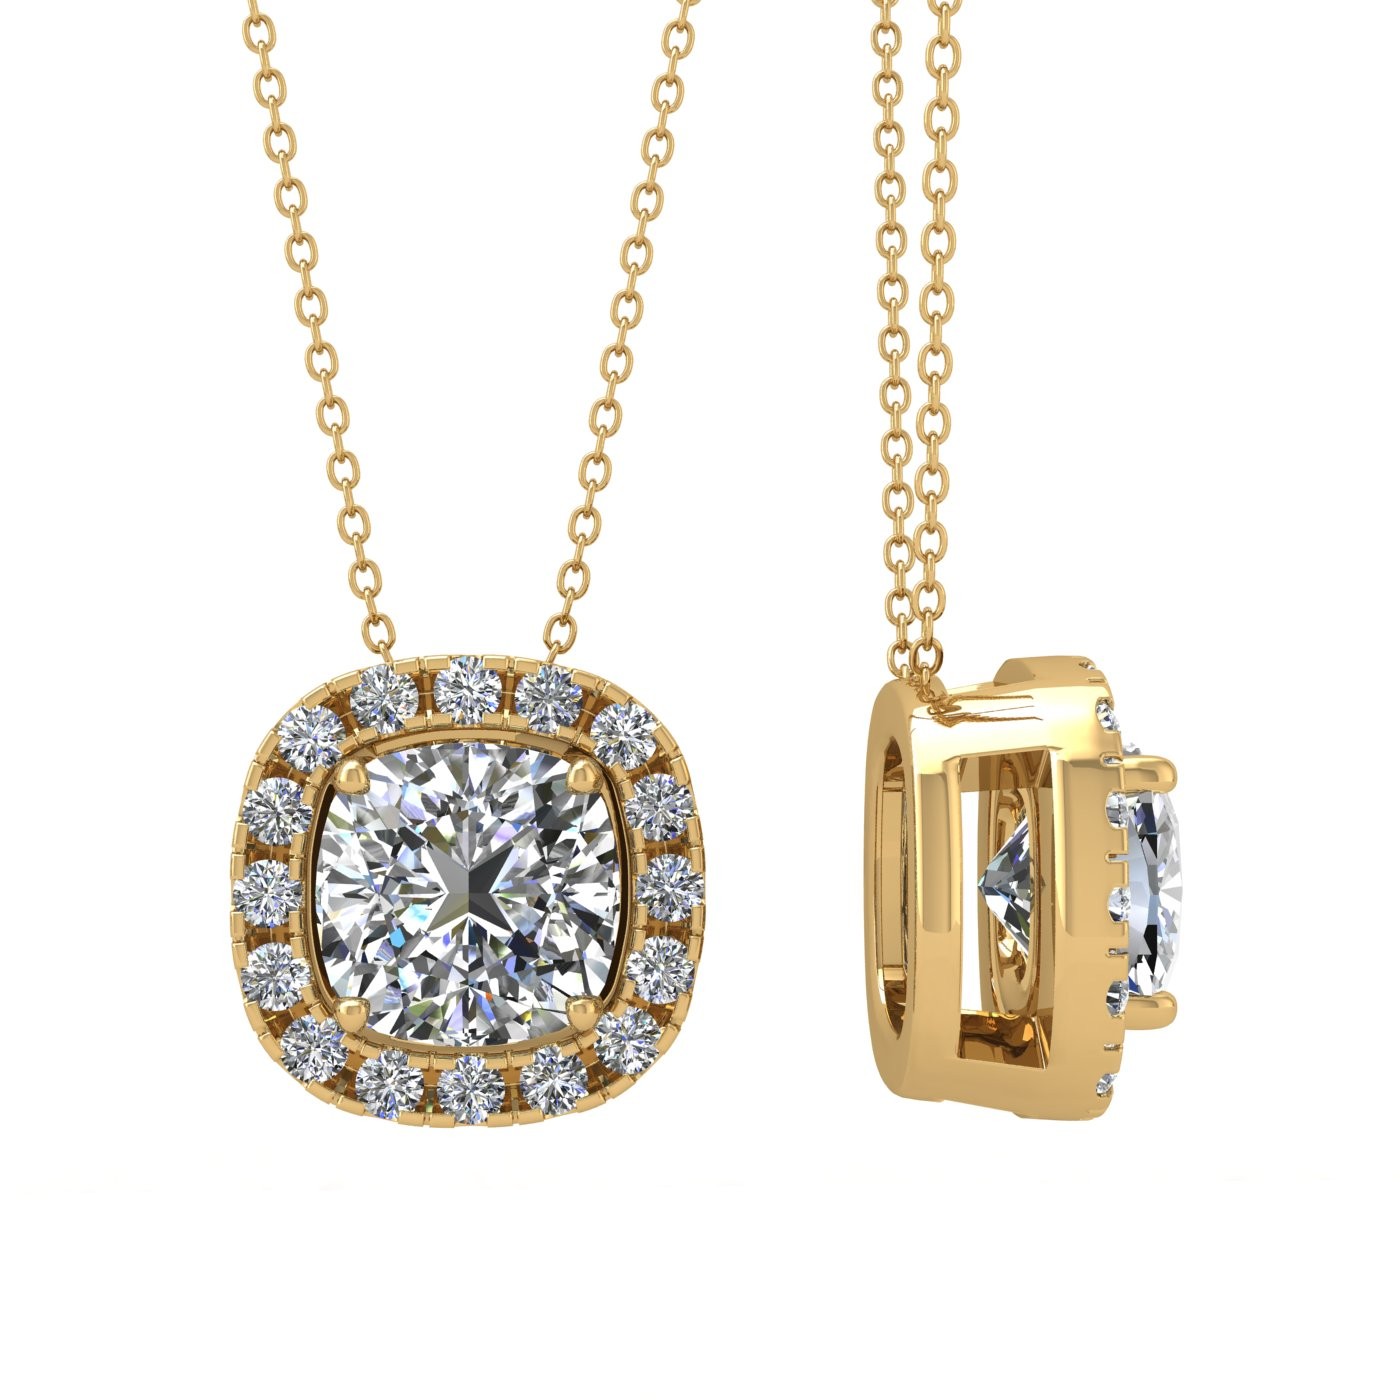 18k yellow gold 2 ct 4 prongs cushion shape diamond pendant with diamond pavÉ set halo